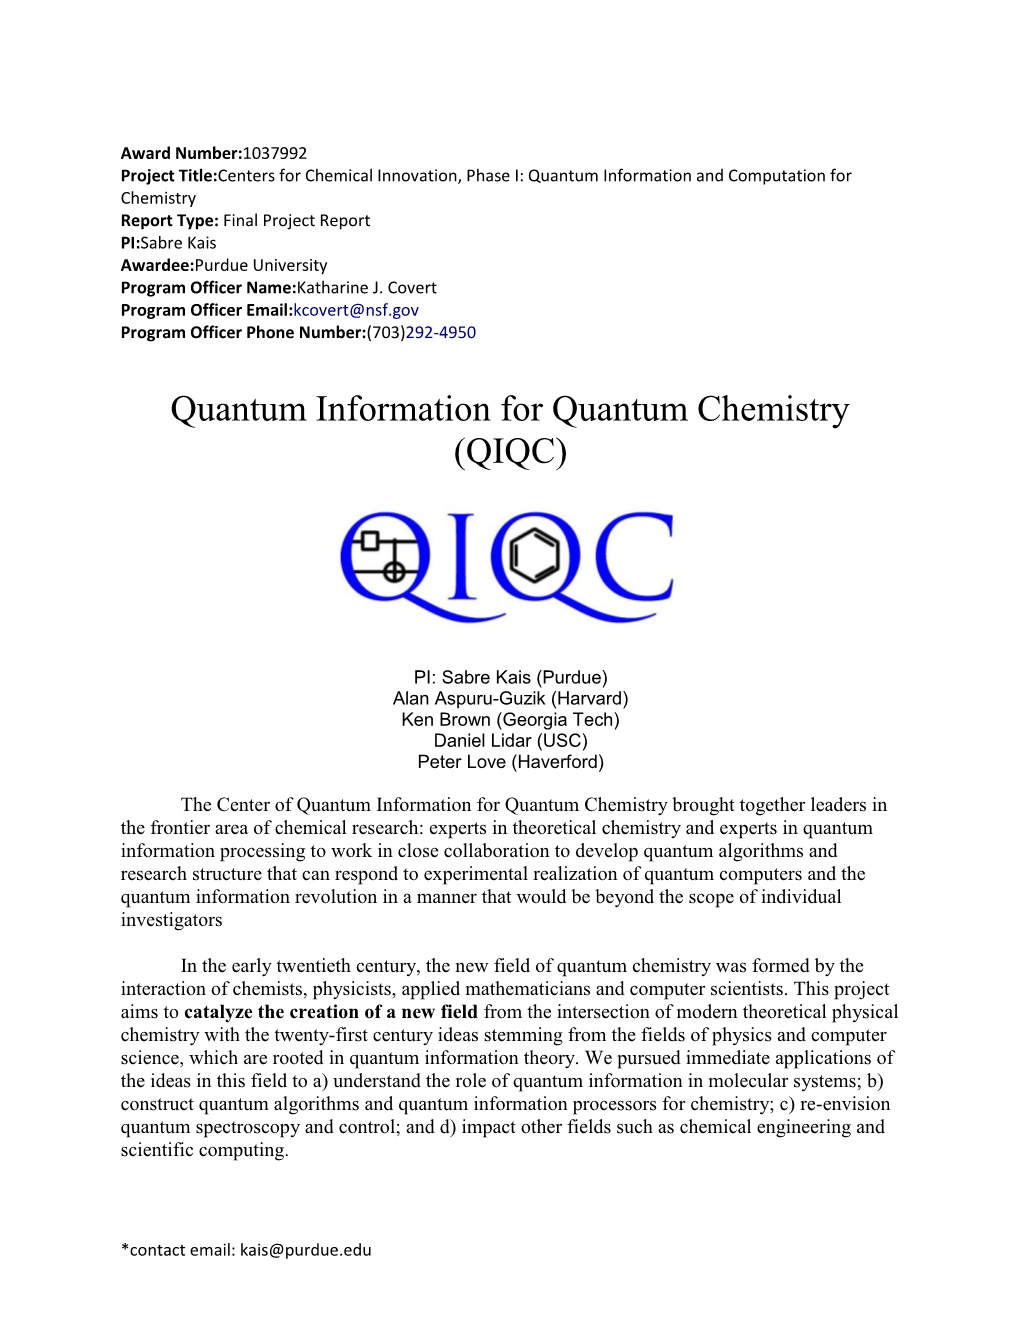 Quantum Information for Quantum Chemistry (QIQC)